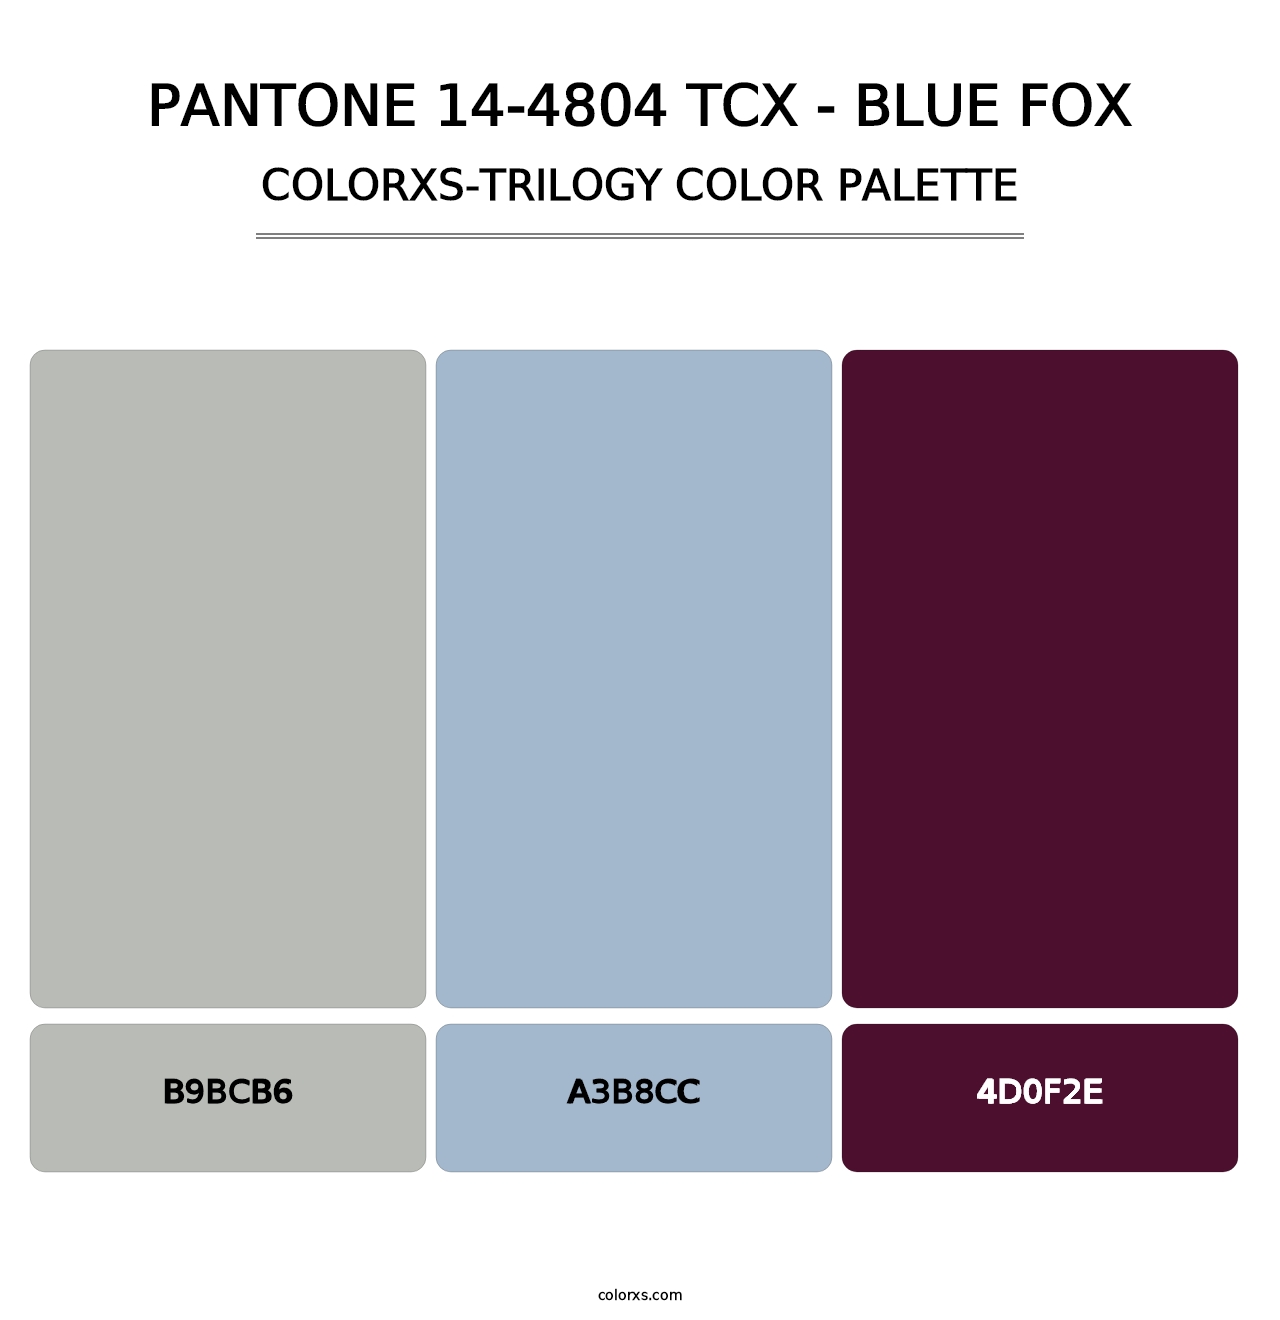 PANTONE 14-4804 TCX - Blue Fox - Colorxs Trilogy Palette